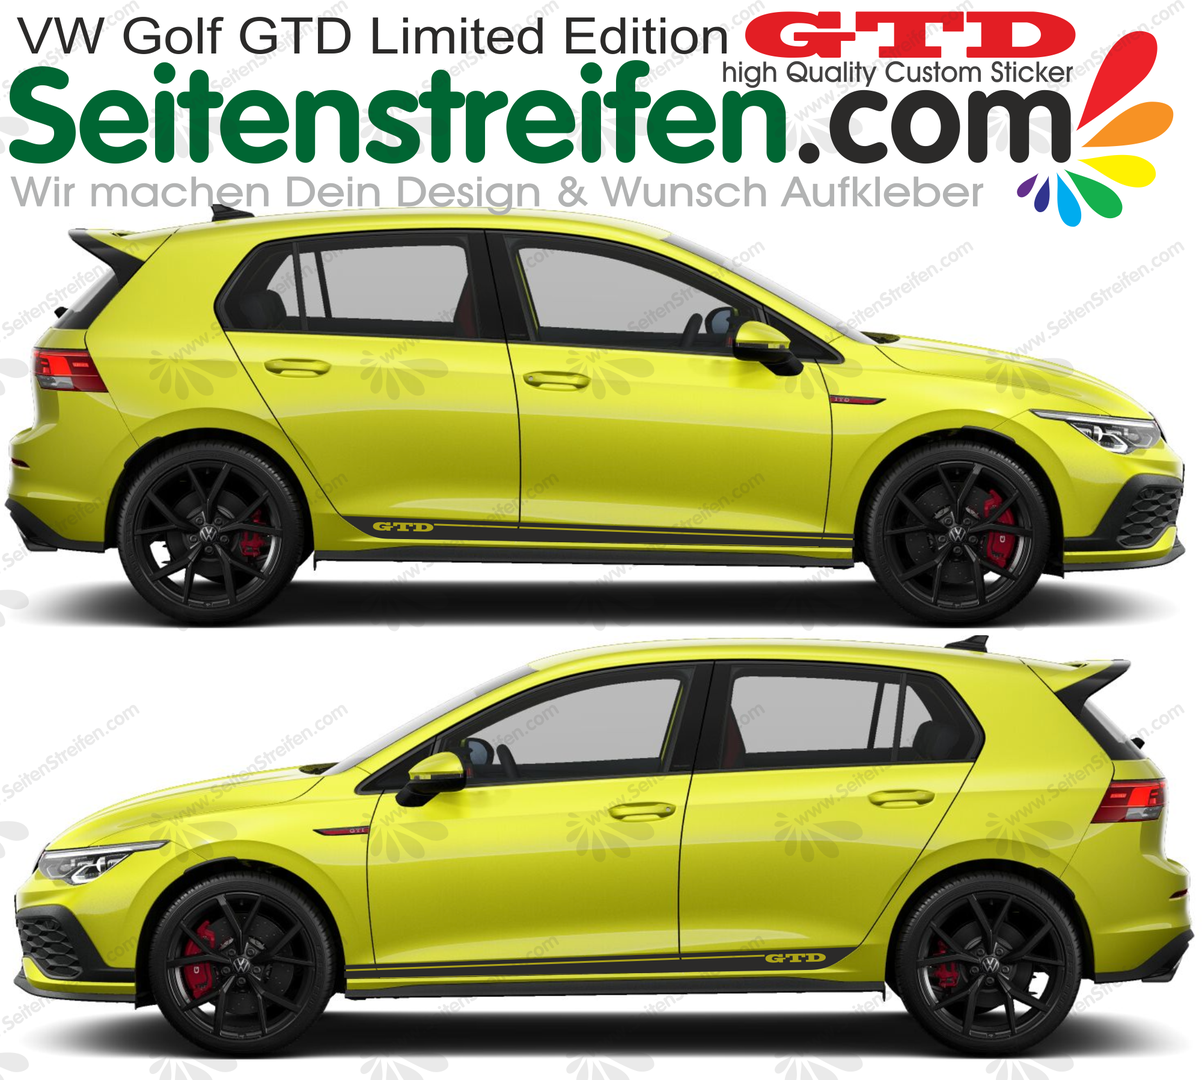 VW Golf GTD Limited Edition - adesivi strisce laterali adesive auto sticker set